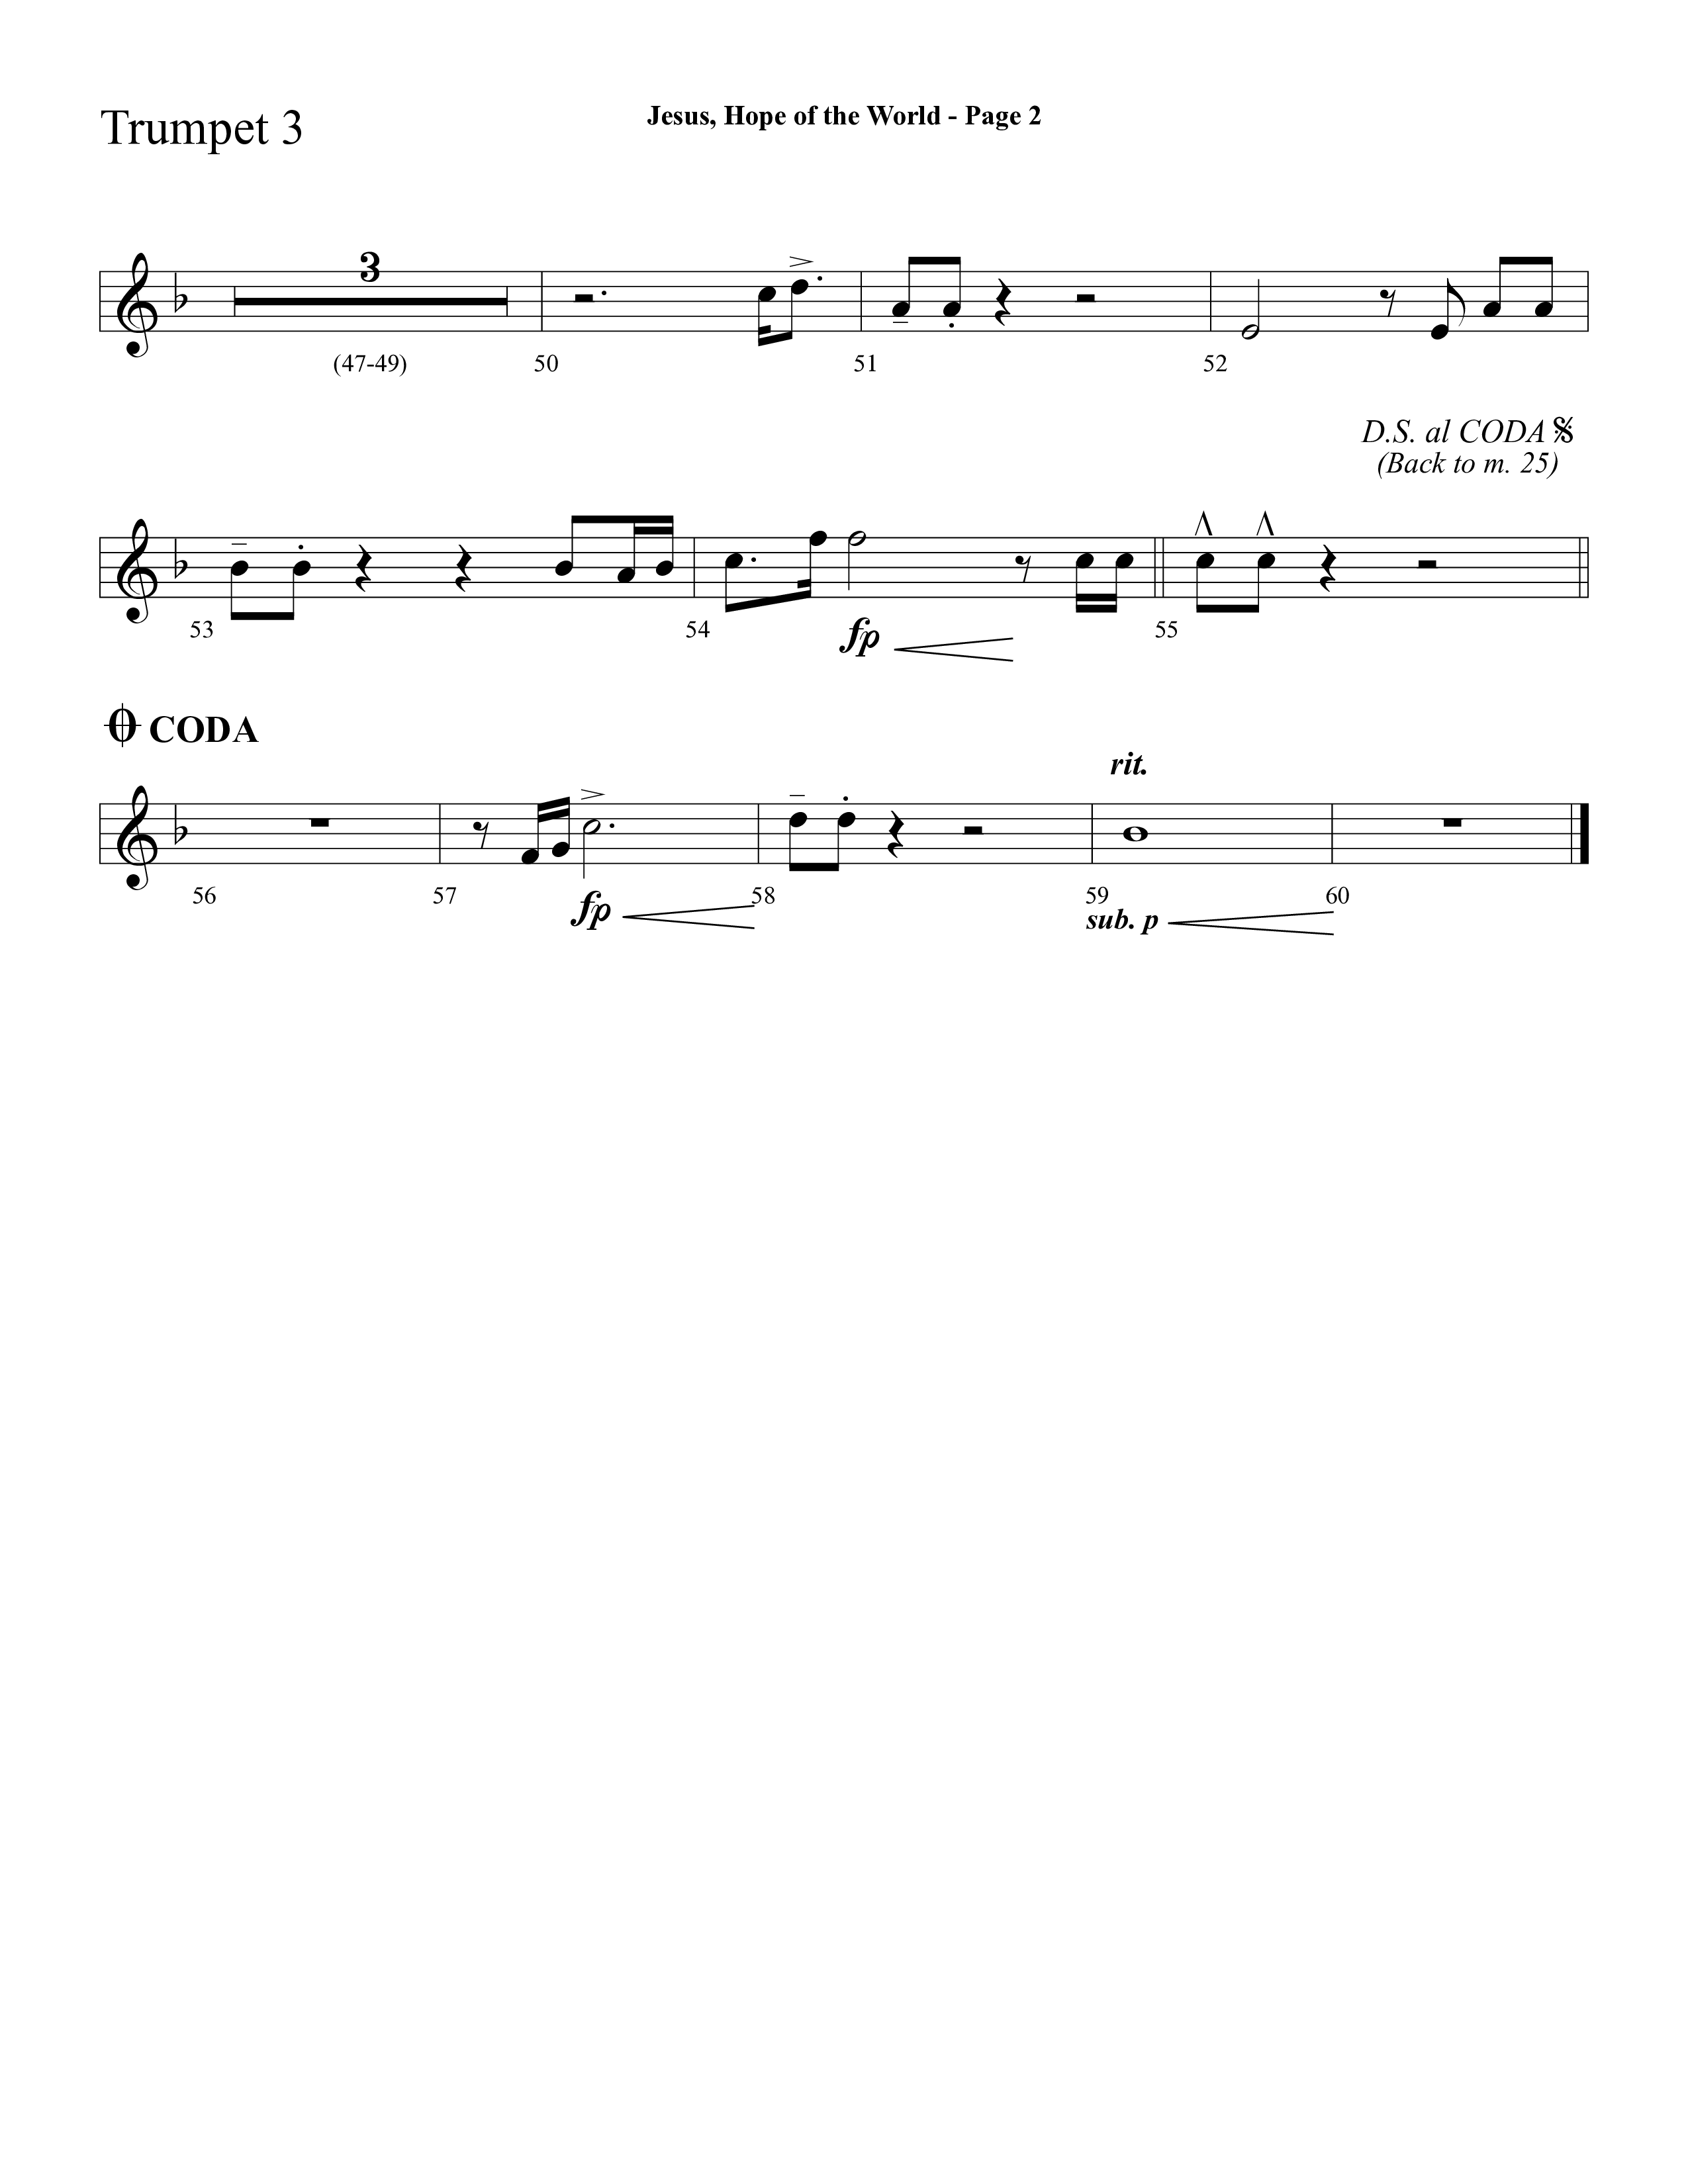 Jesus Hope Of The World (Choral Anthem SATB) Trumpet 3 (Lifeway Choral / Arr. Mark Willard / Orch. Stephen K. Hand / Orch. Phillip Keveren)